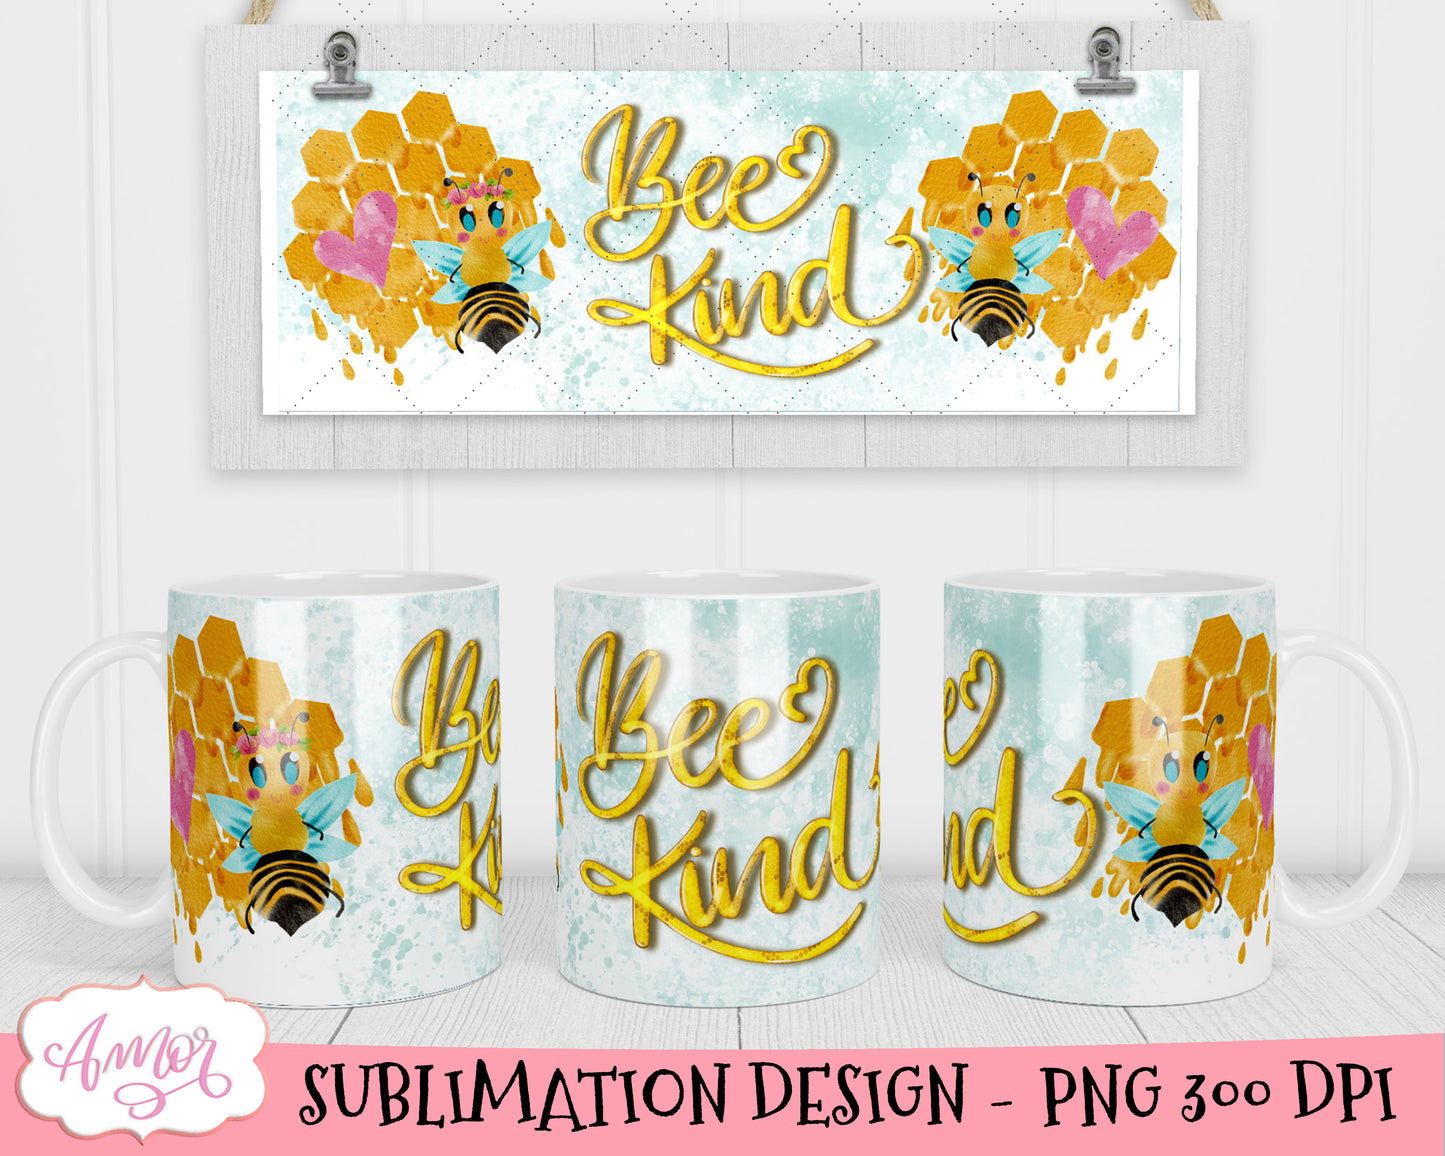 Bee kind mug wrap for sublimation